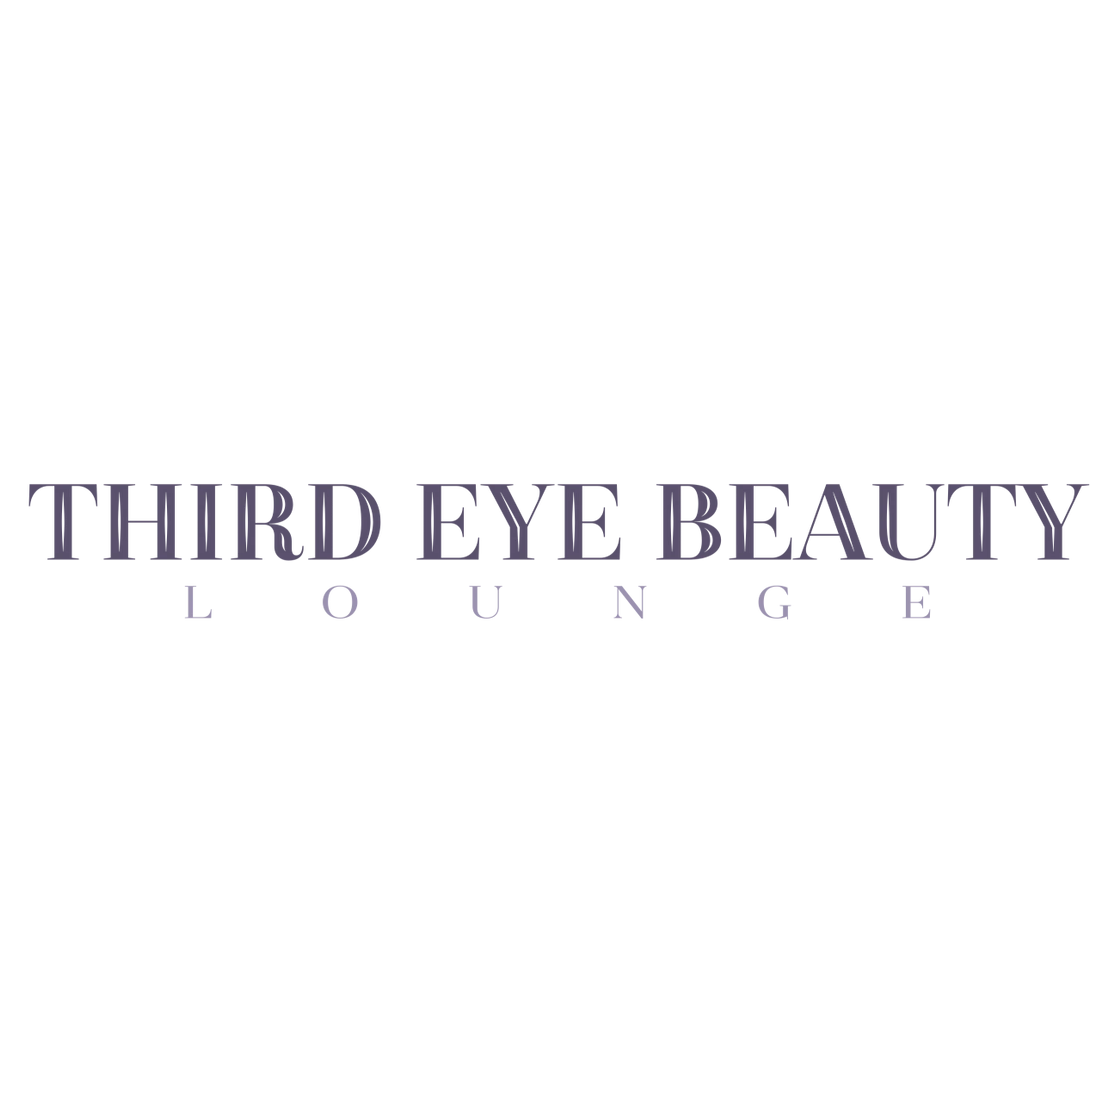 Third Eye Beauty Lounge - Tempe, AZ 85288 - (602)909-9968 | ShowMeLocal.com